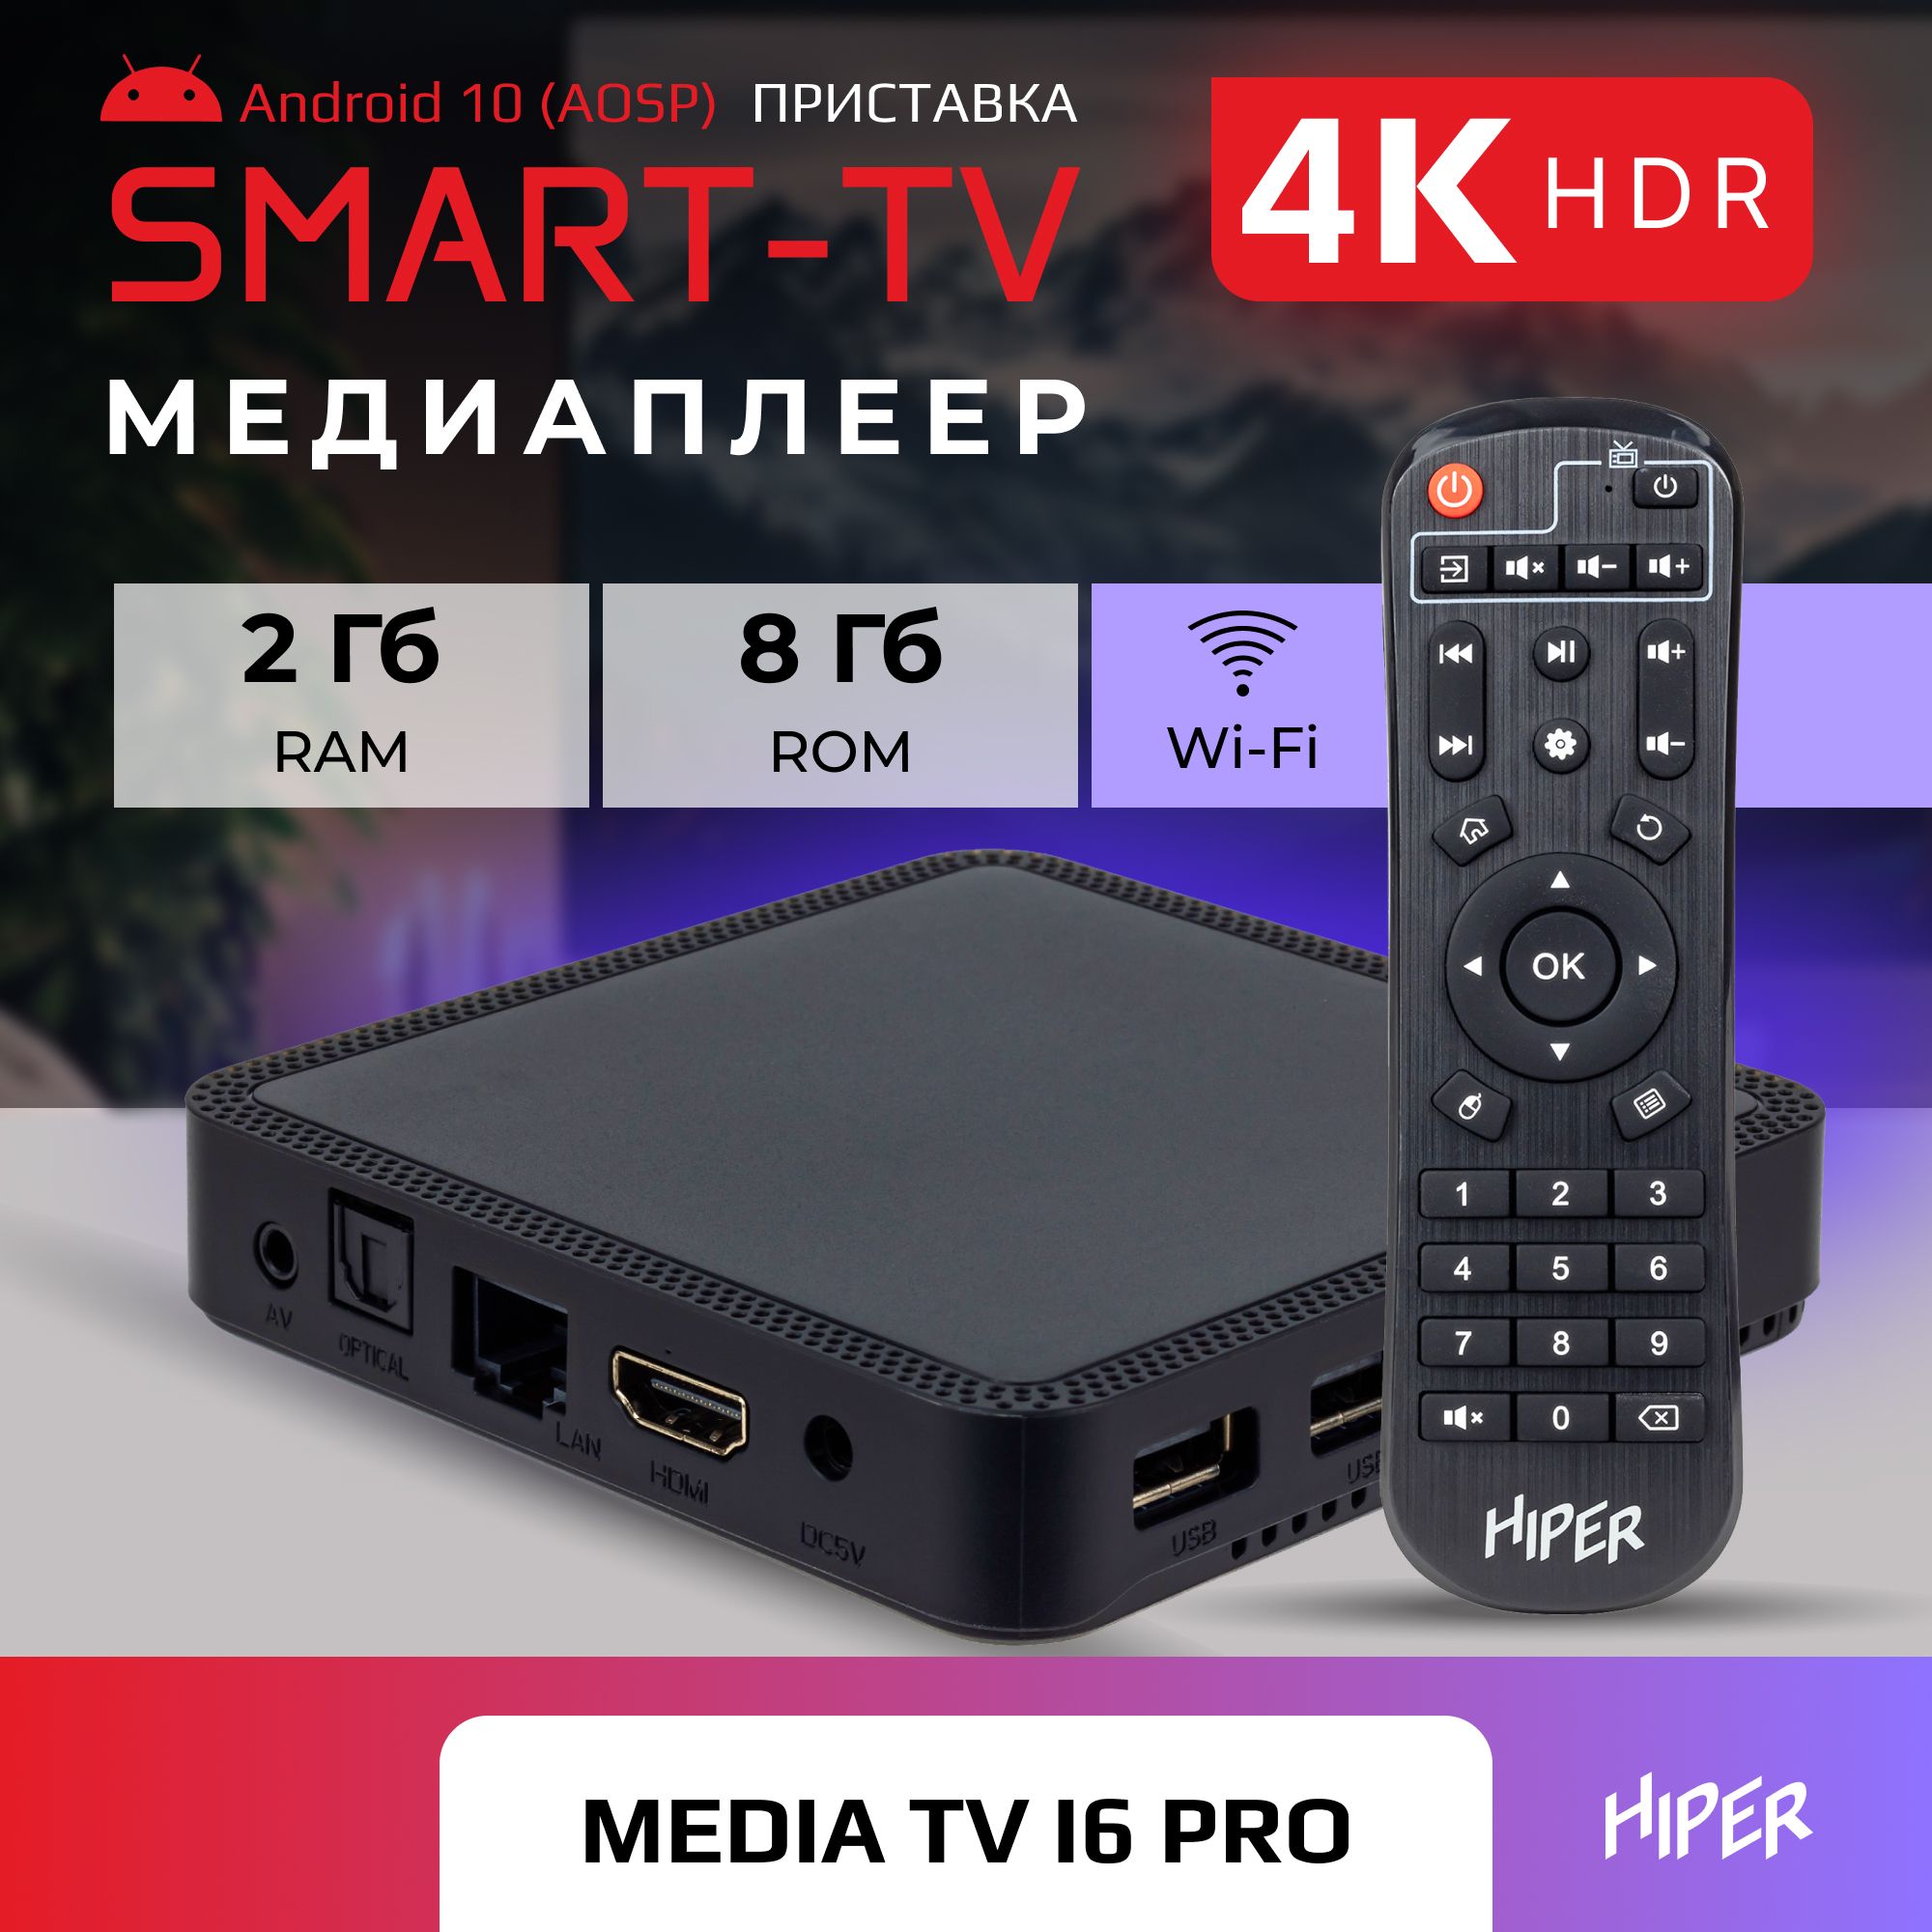 Smart-TV приставка HIPER MEDIA ATV i6 PRO, 4K, HDR, Android AOSP, 8 Gb, 2 Gb (RAM), Wi-Fi, купить в Москве, цены в интернет-магазинах на Мегамаркет